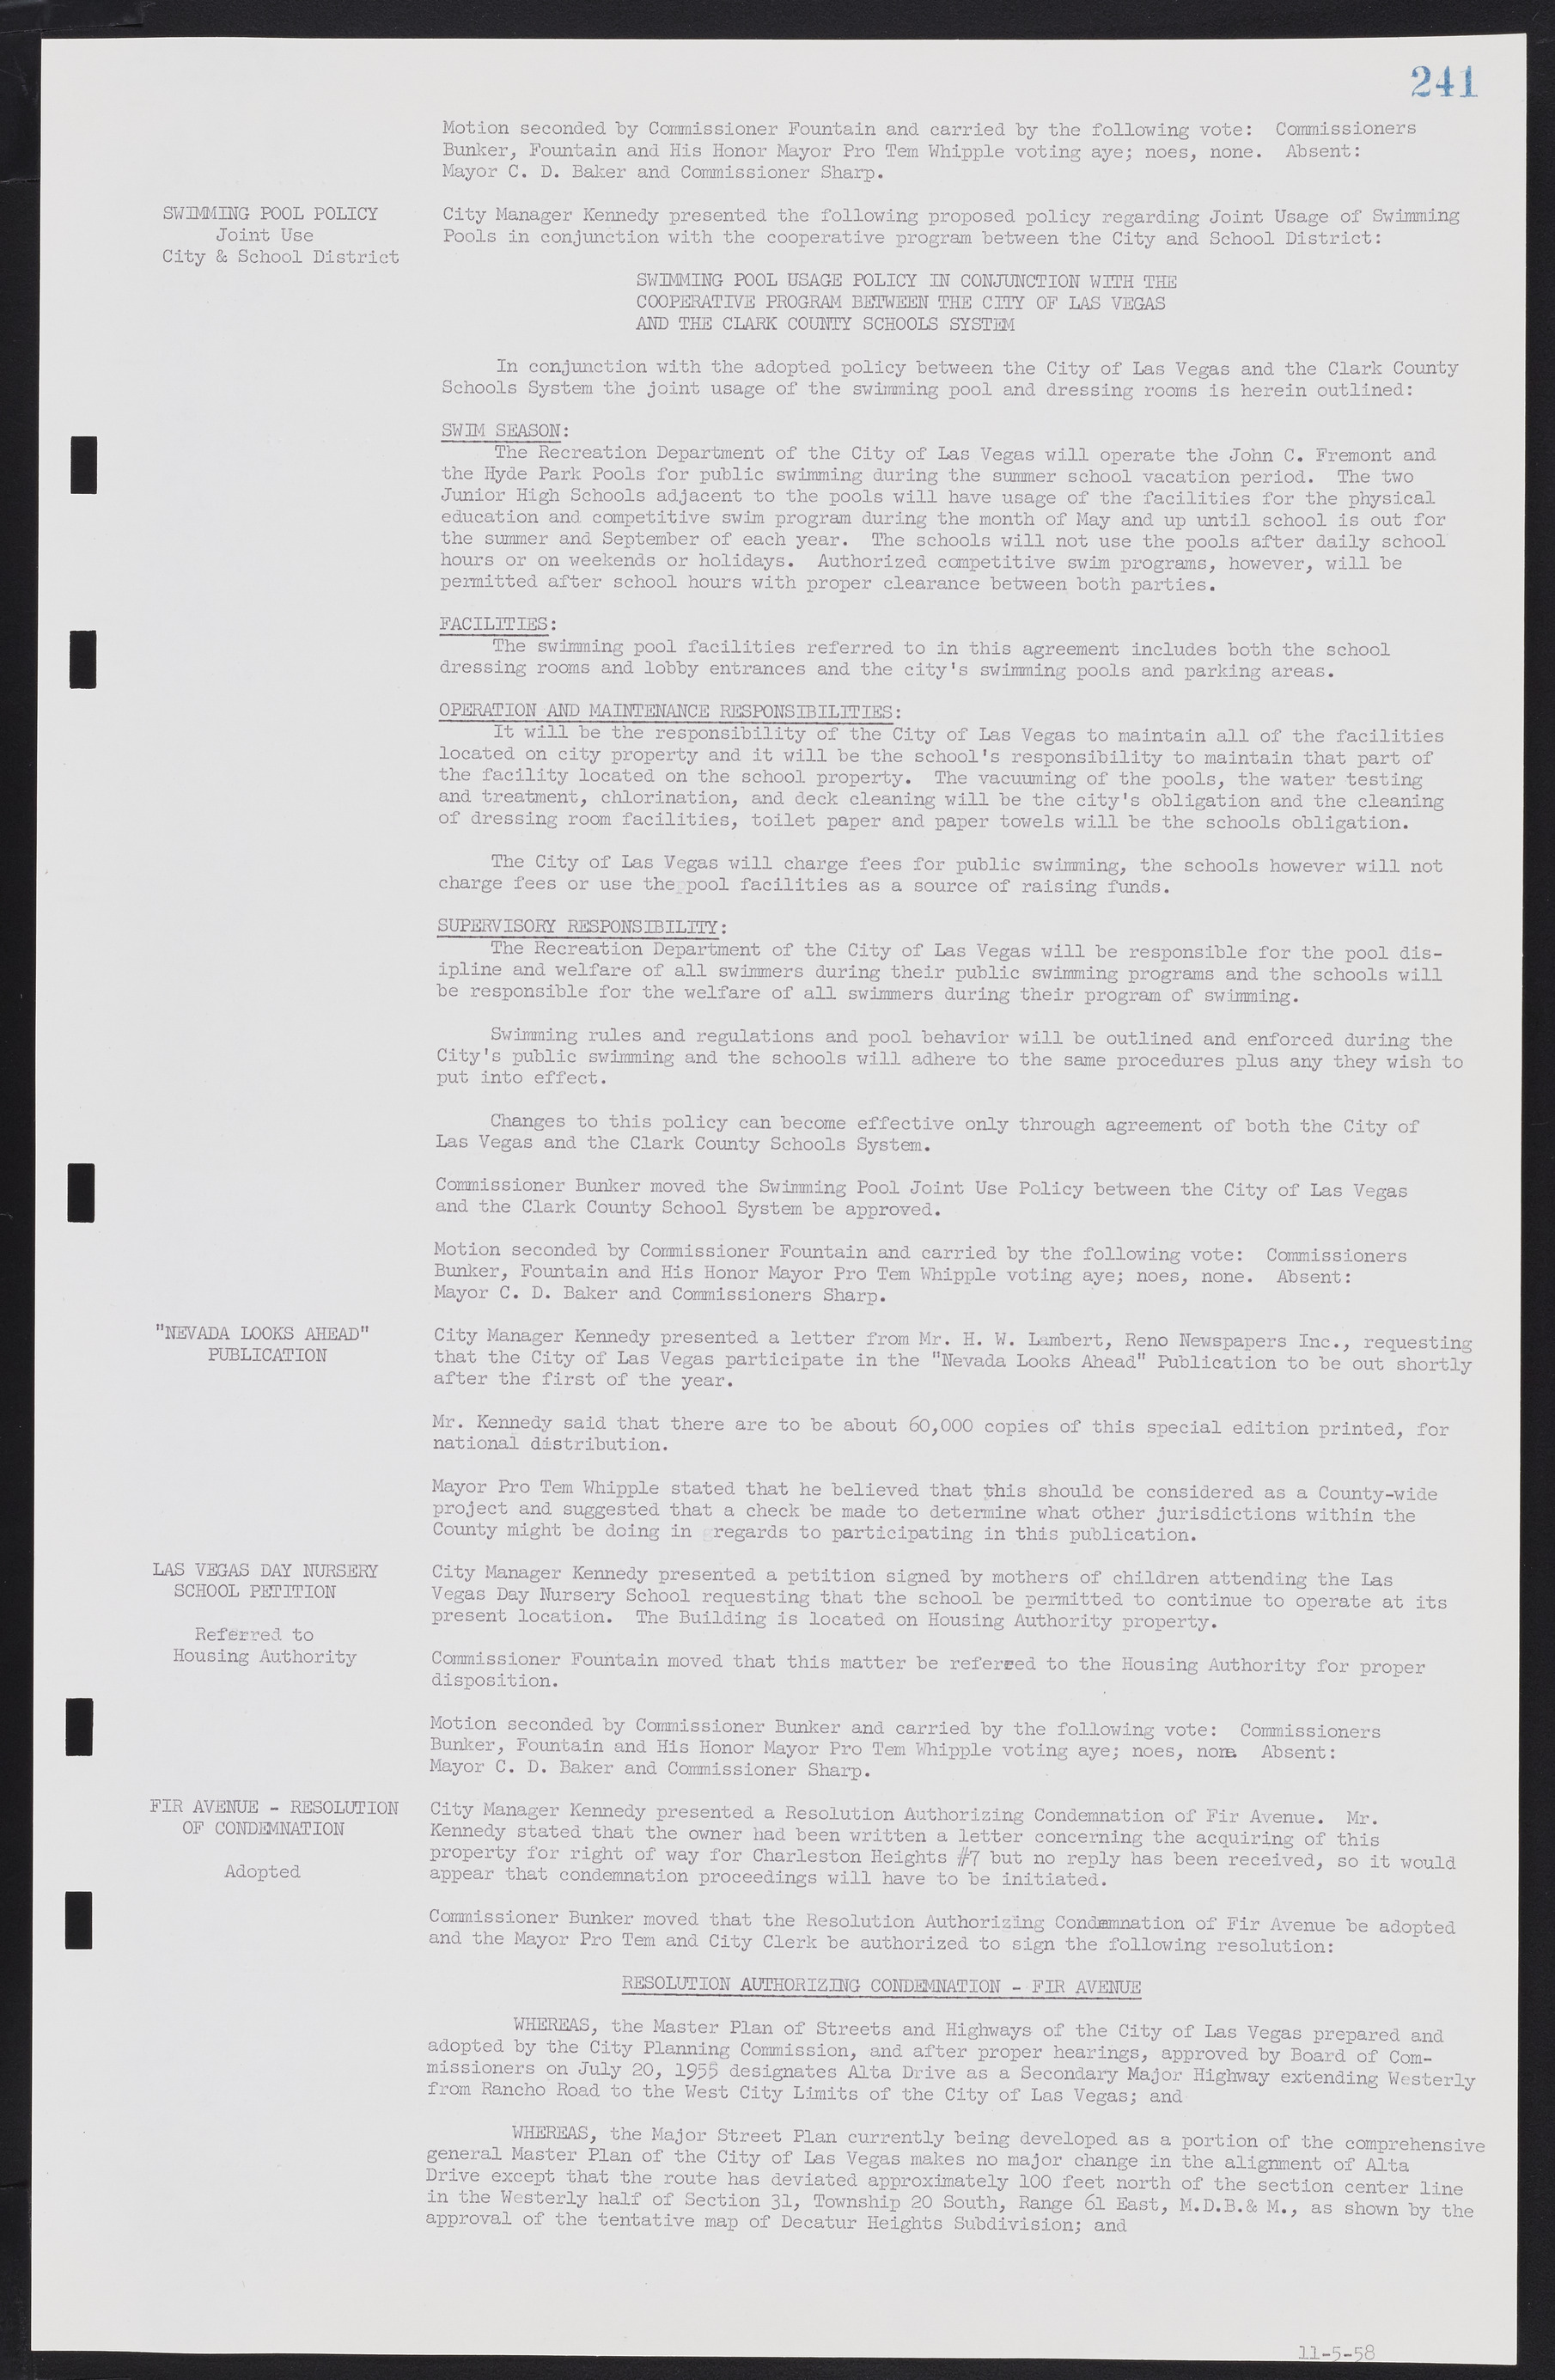 Las Vegas City Commission Minutes, November 20, 1957 to December 2, 1959, lvc000011-249